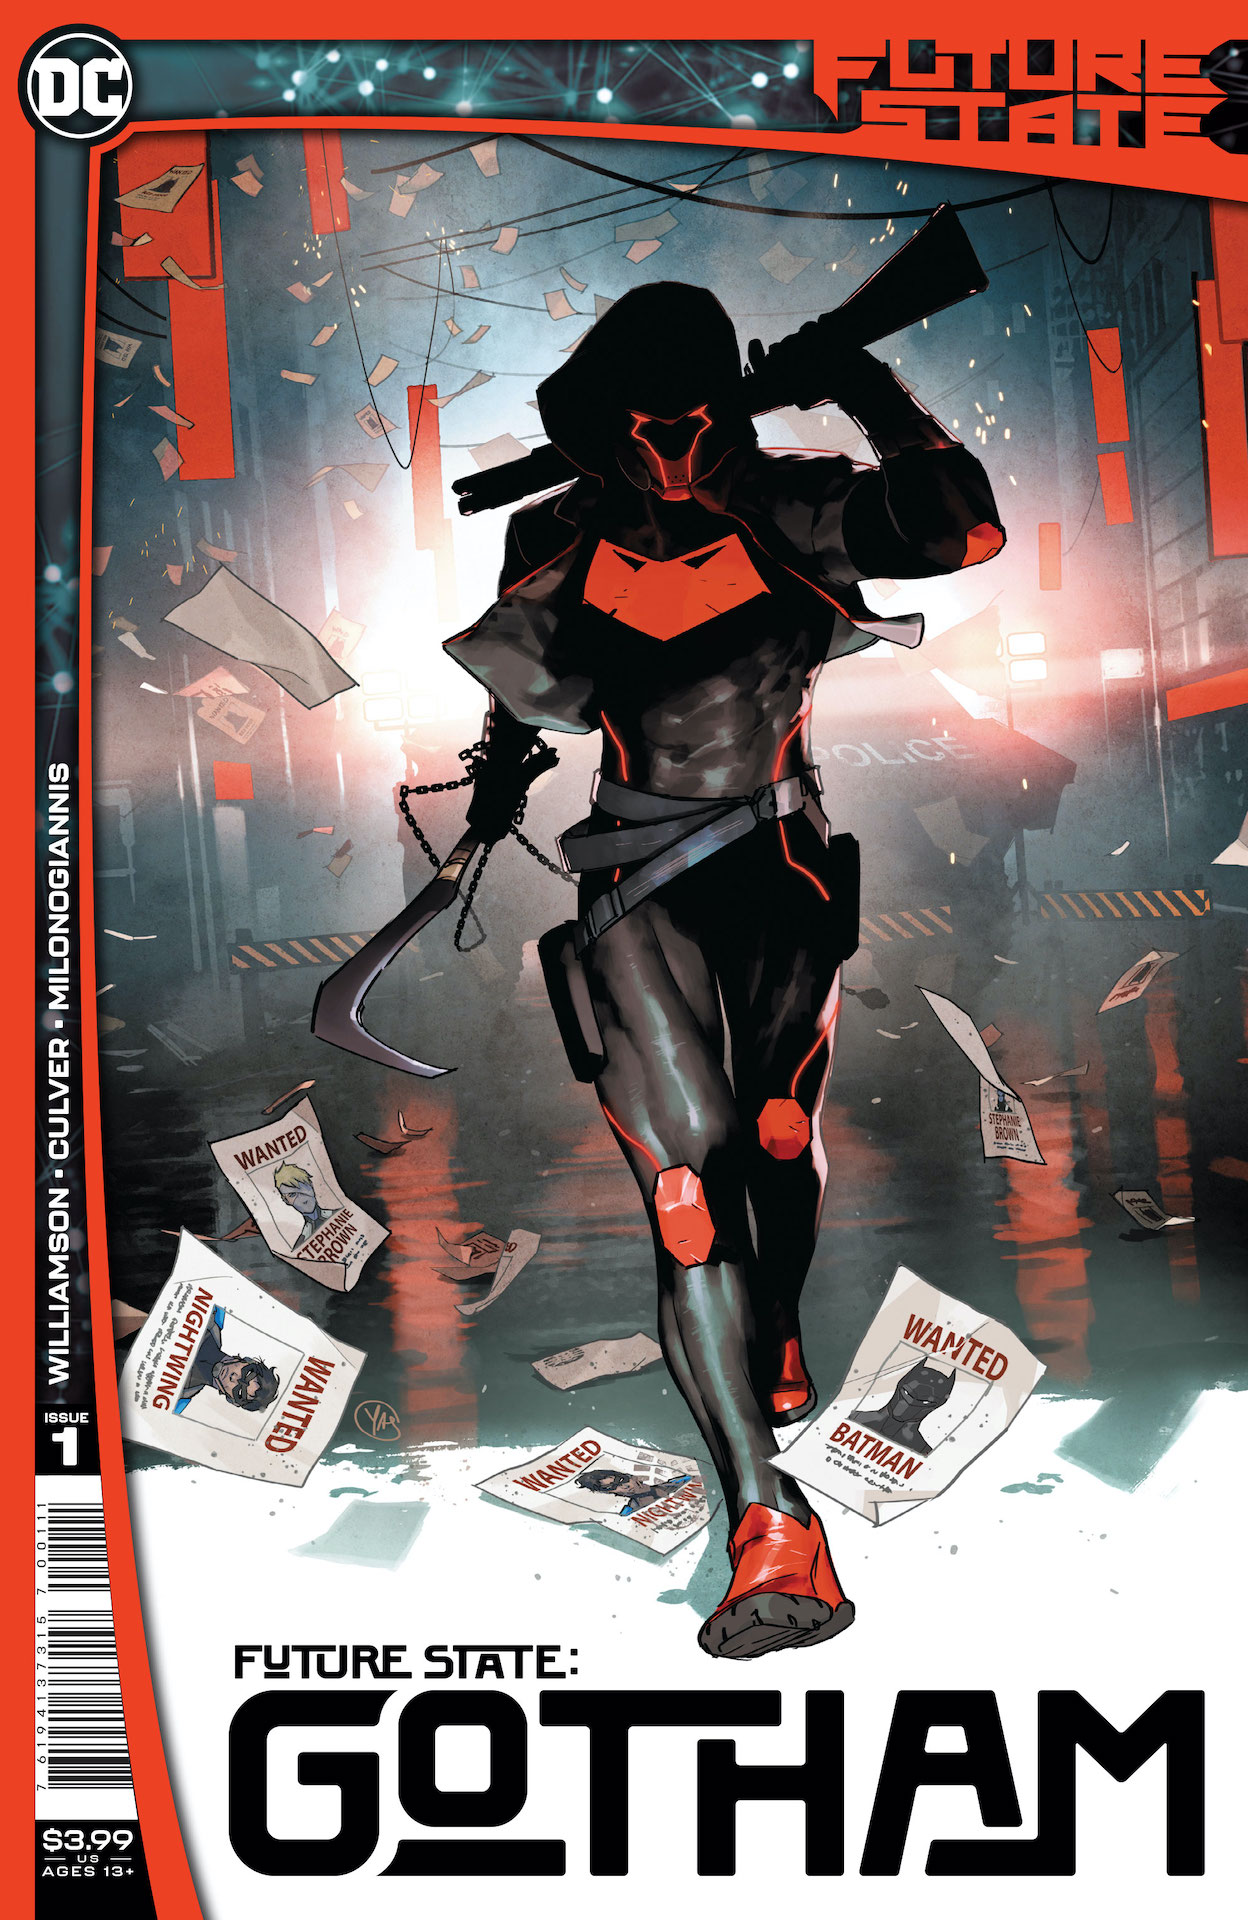 DC Preview: Future State: Gotham #1